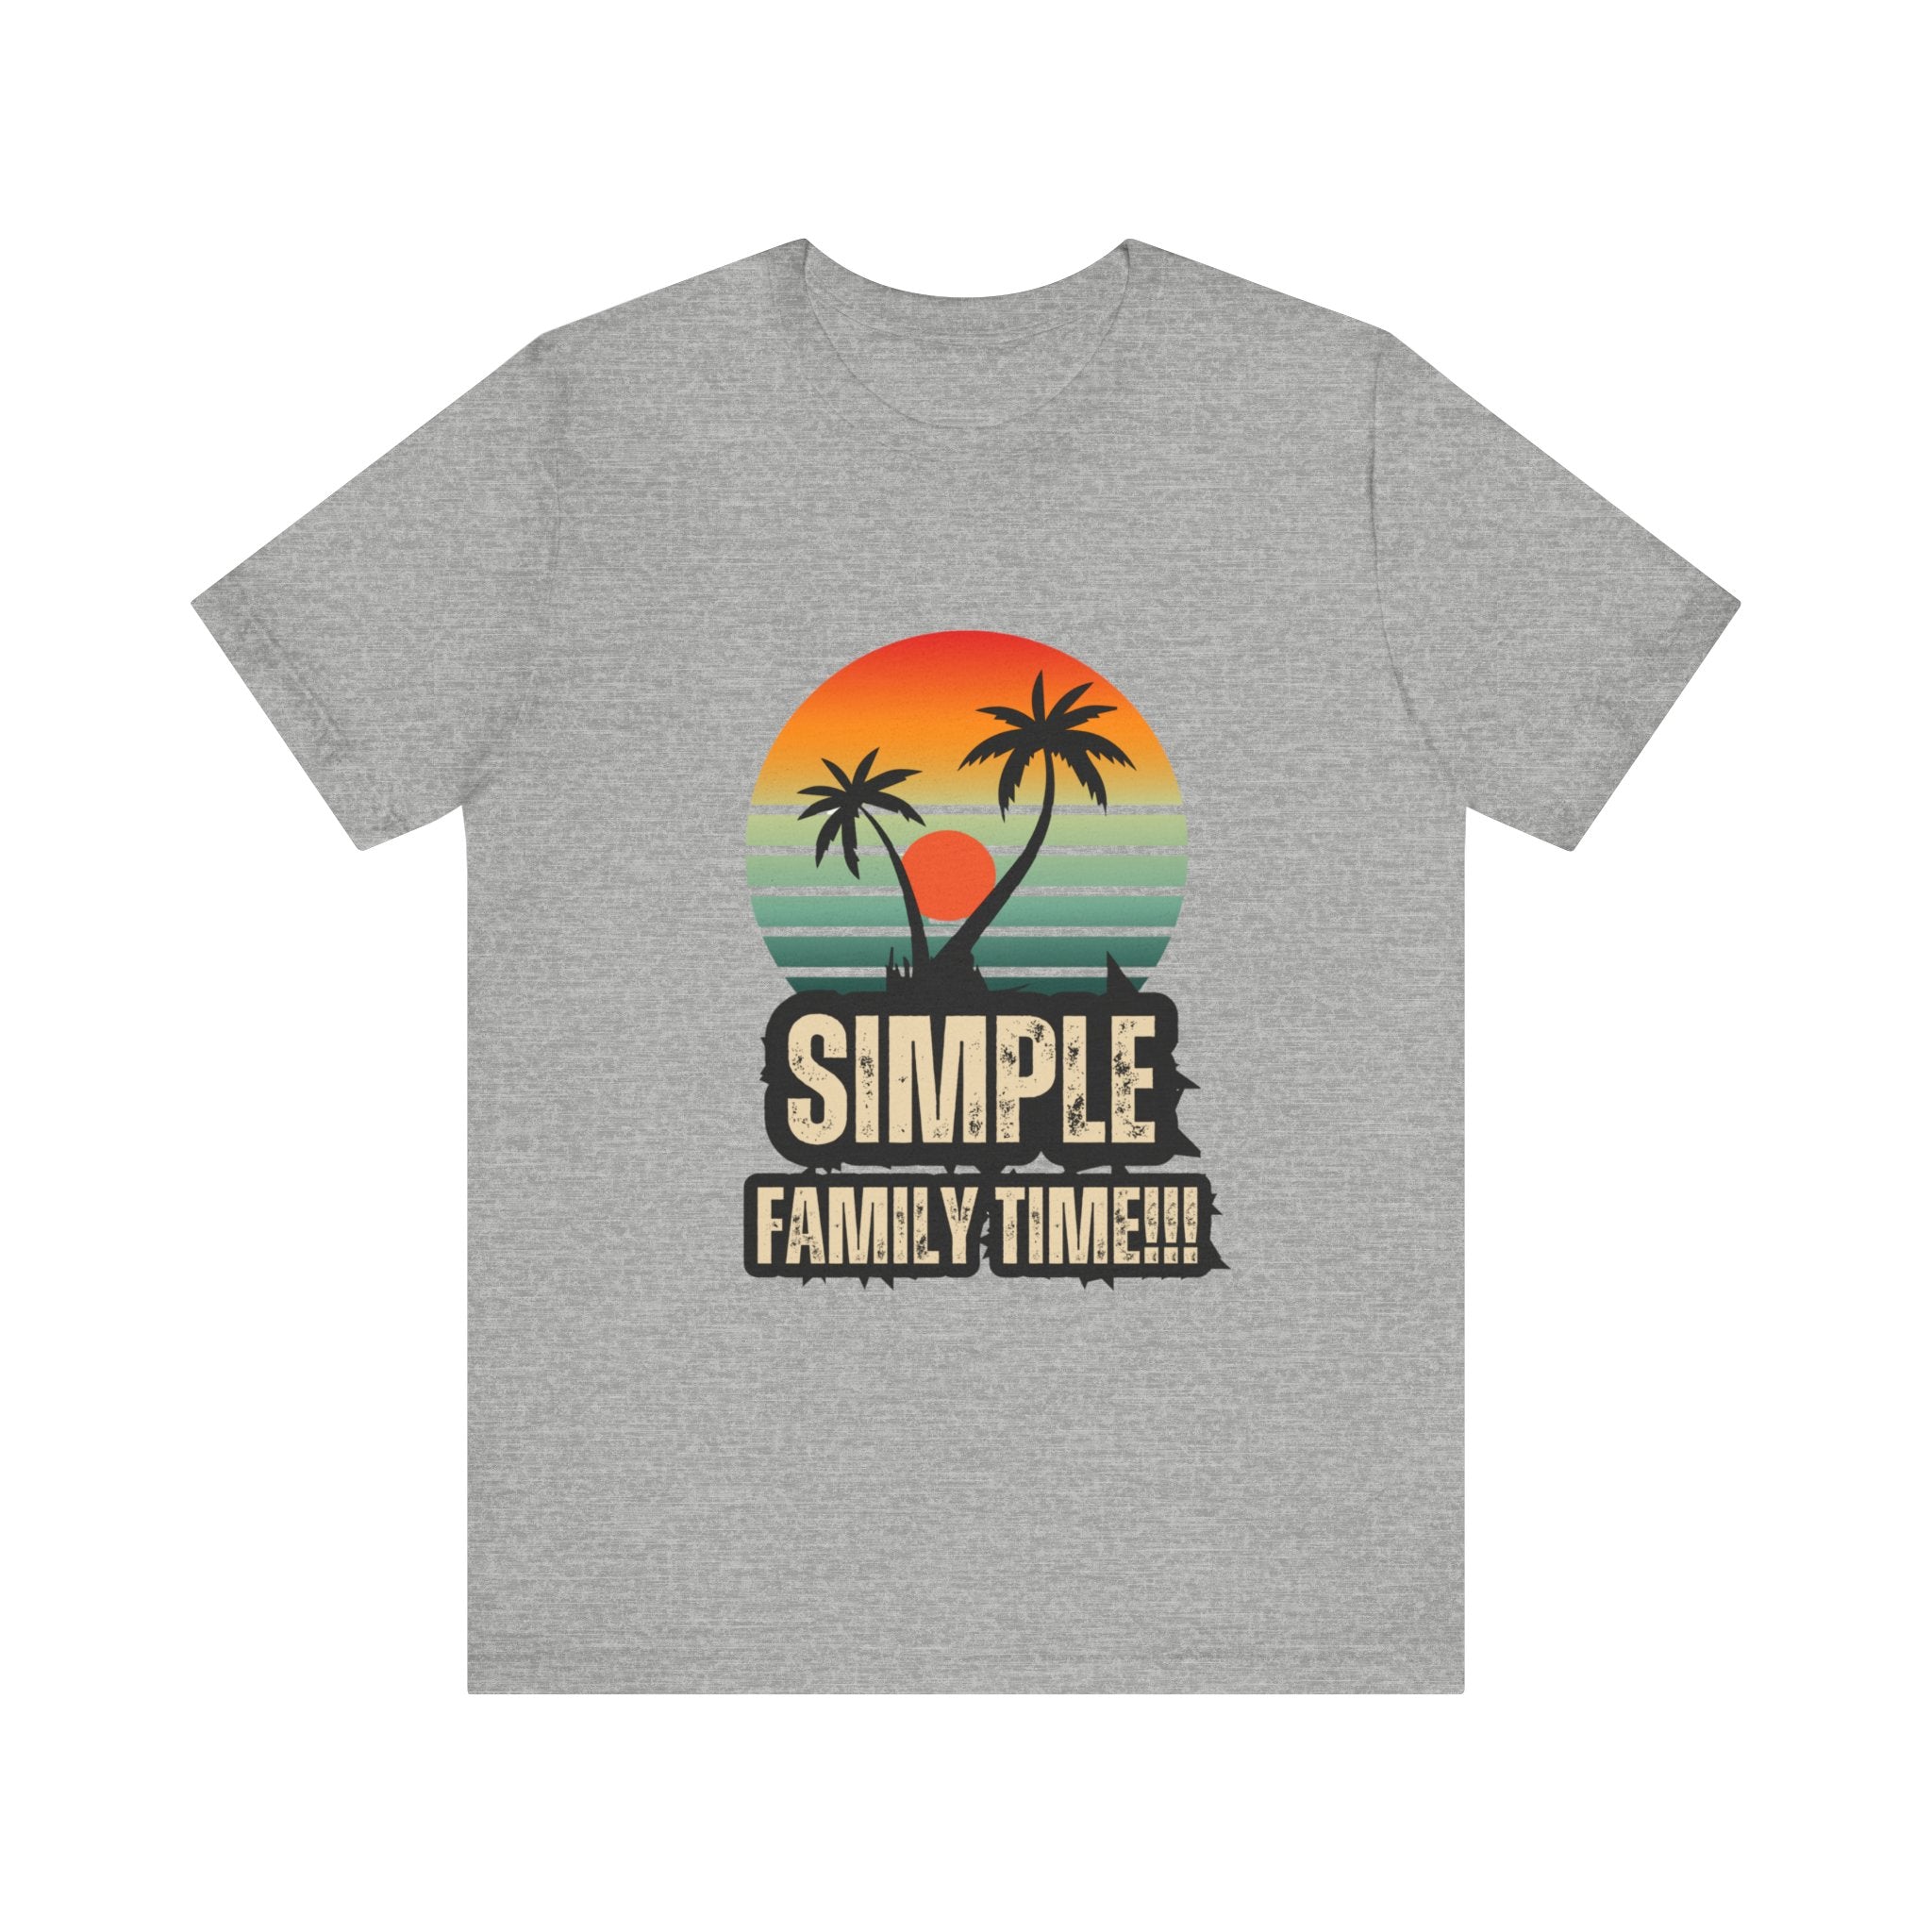 Family Time Unisex Tee, Women's Crew Neck T-shirt, Regular Fit Shirt, Men's DTG Printed Apparel